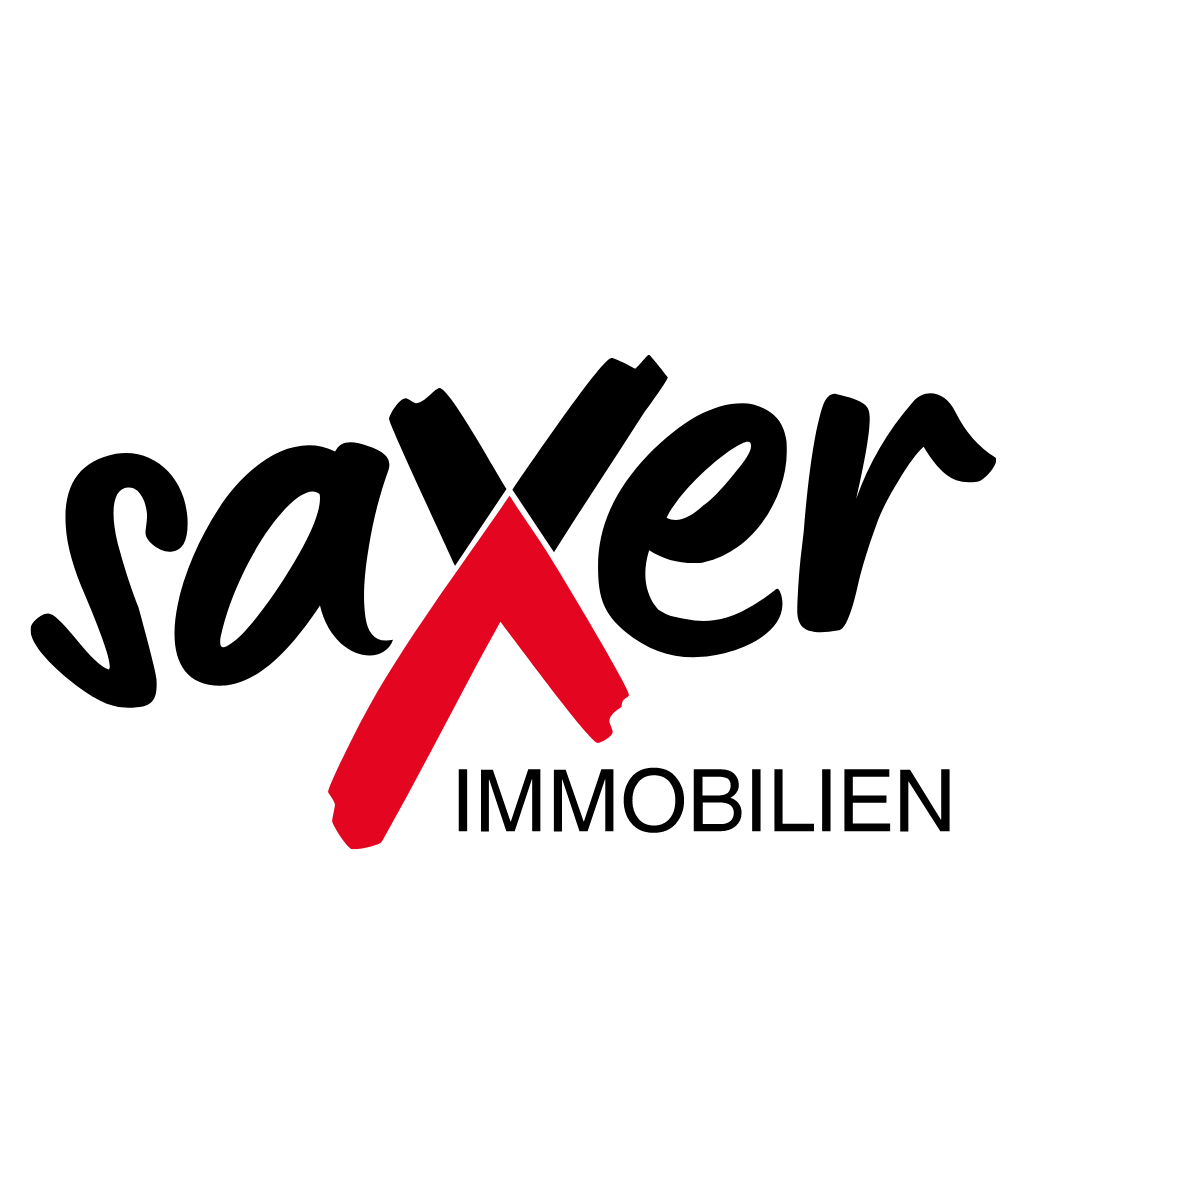 SaXer Immobilien & Verwaltungen Logo